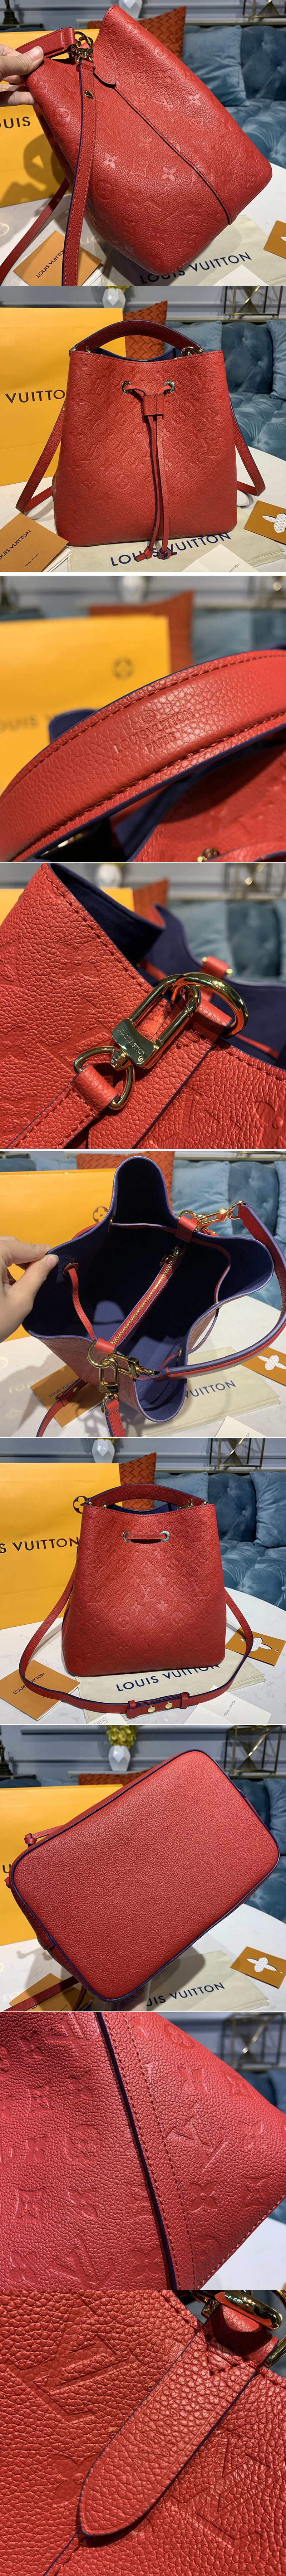 Replica Louis Vuitton M45306 LV Neonoe MM Bags in Navy Red Monogram Empreinte leather